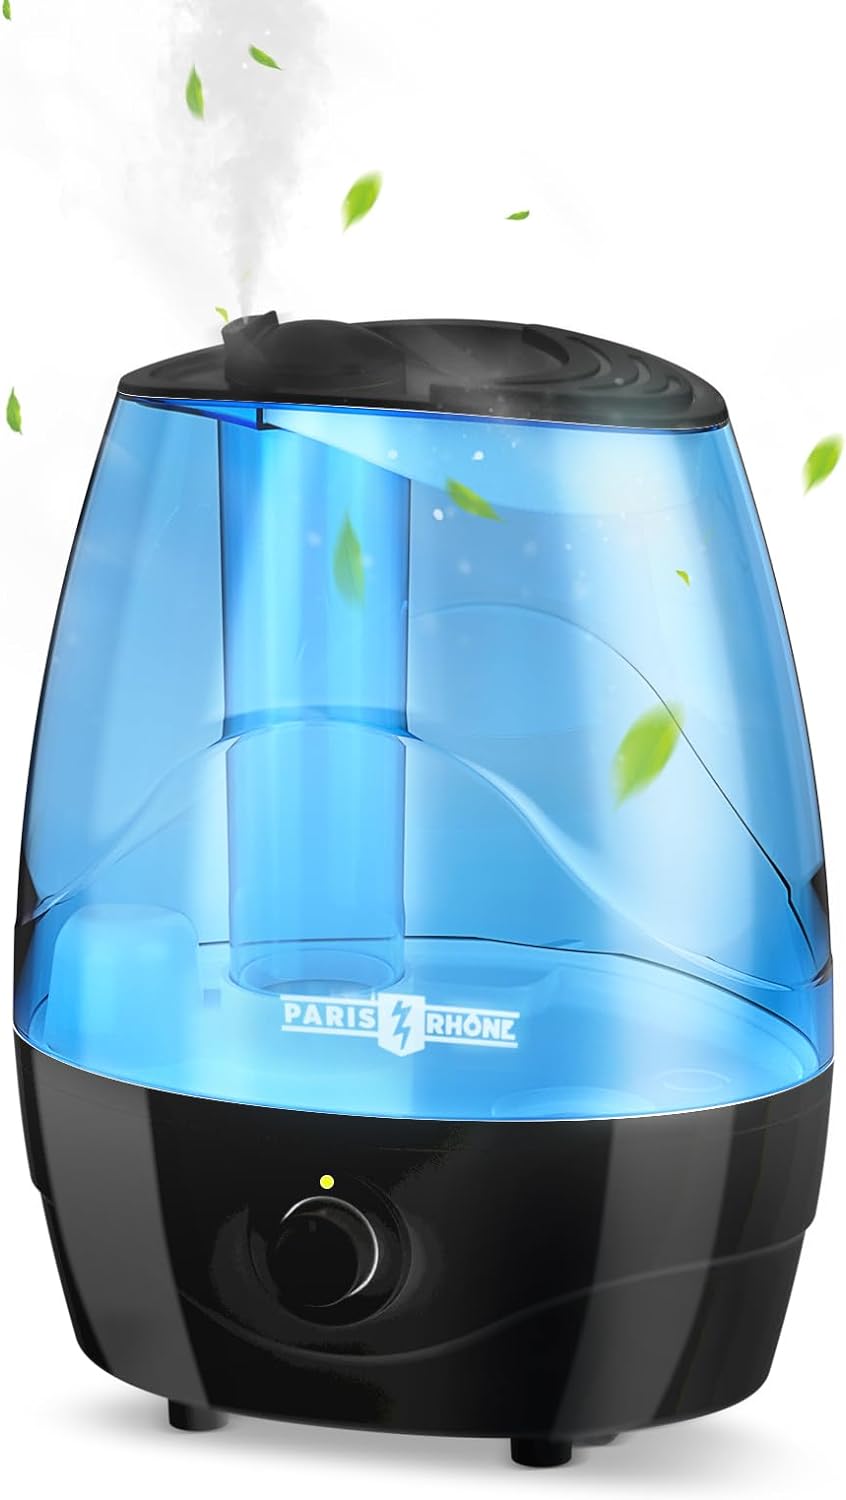 Paris Rh?ne Cool Mist Humidifier AH039, 3.2L Ultrasonic Top Fill Humidifier with LED Light